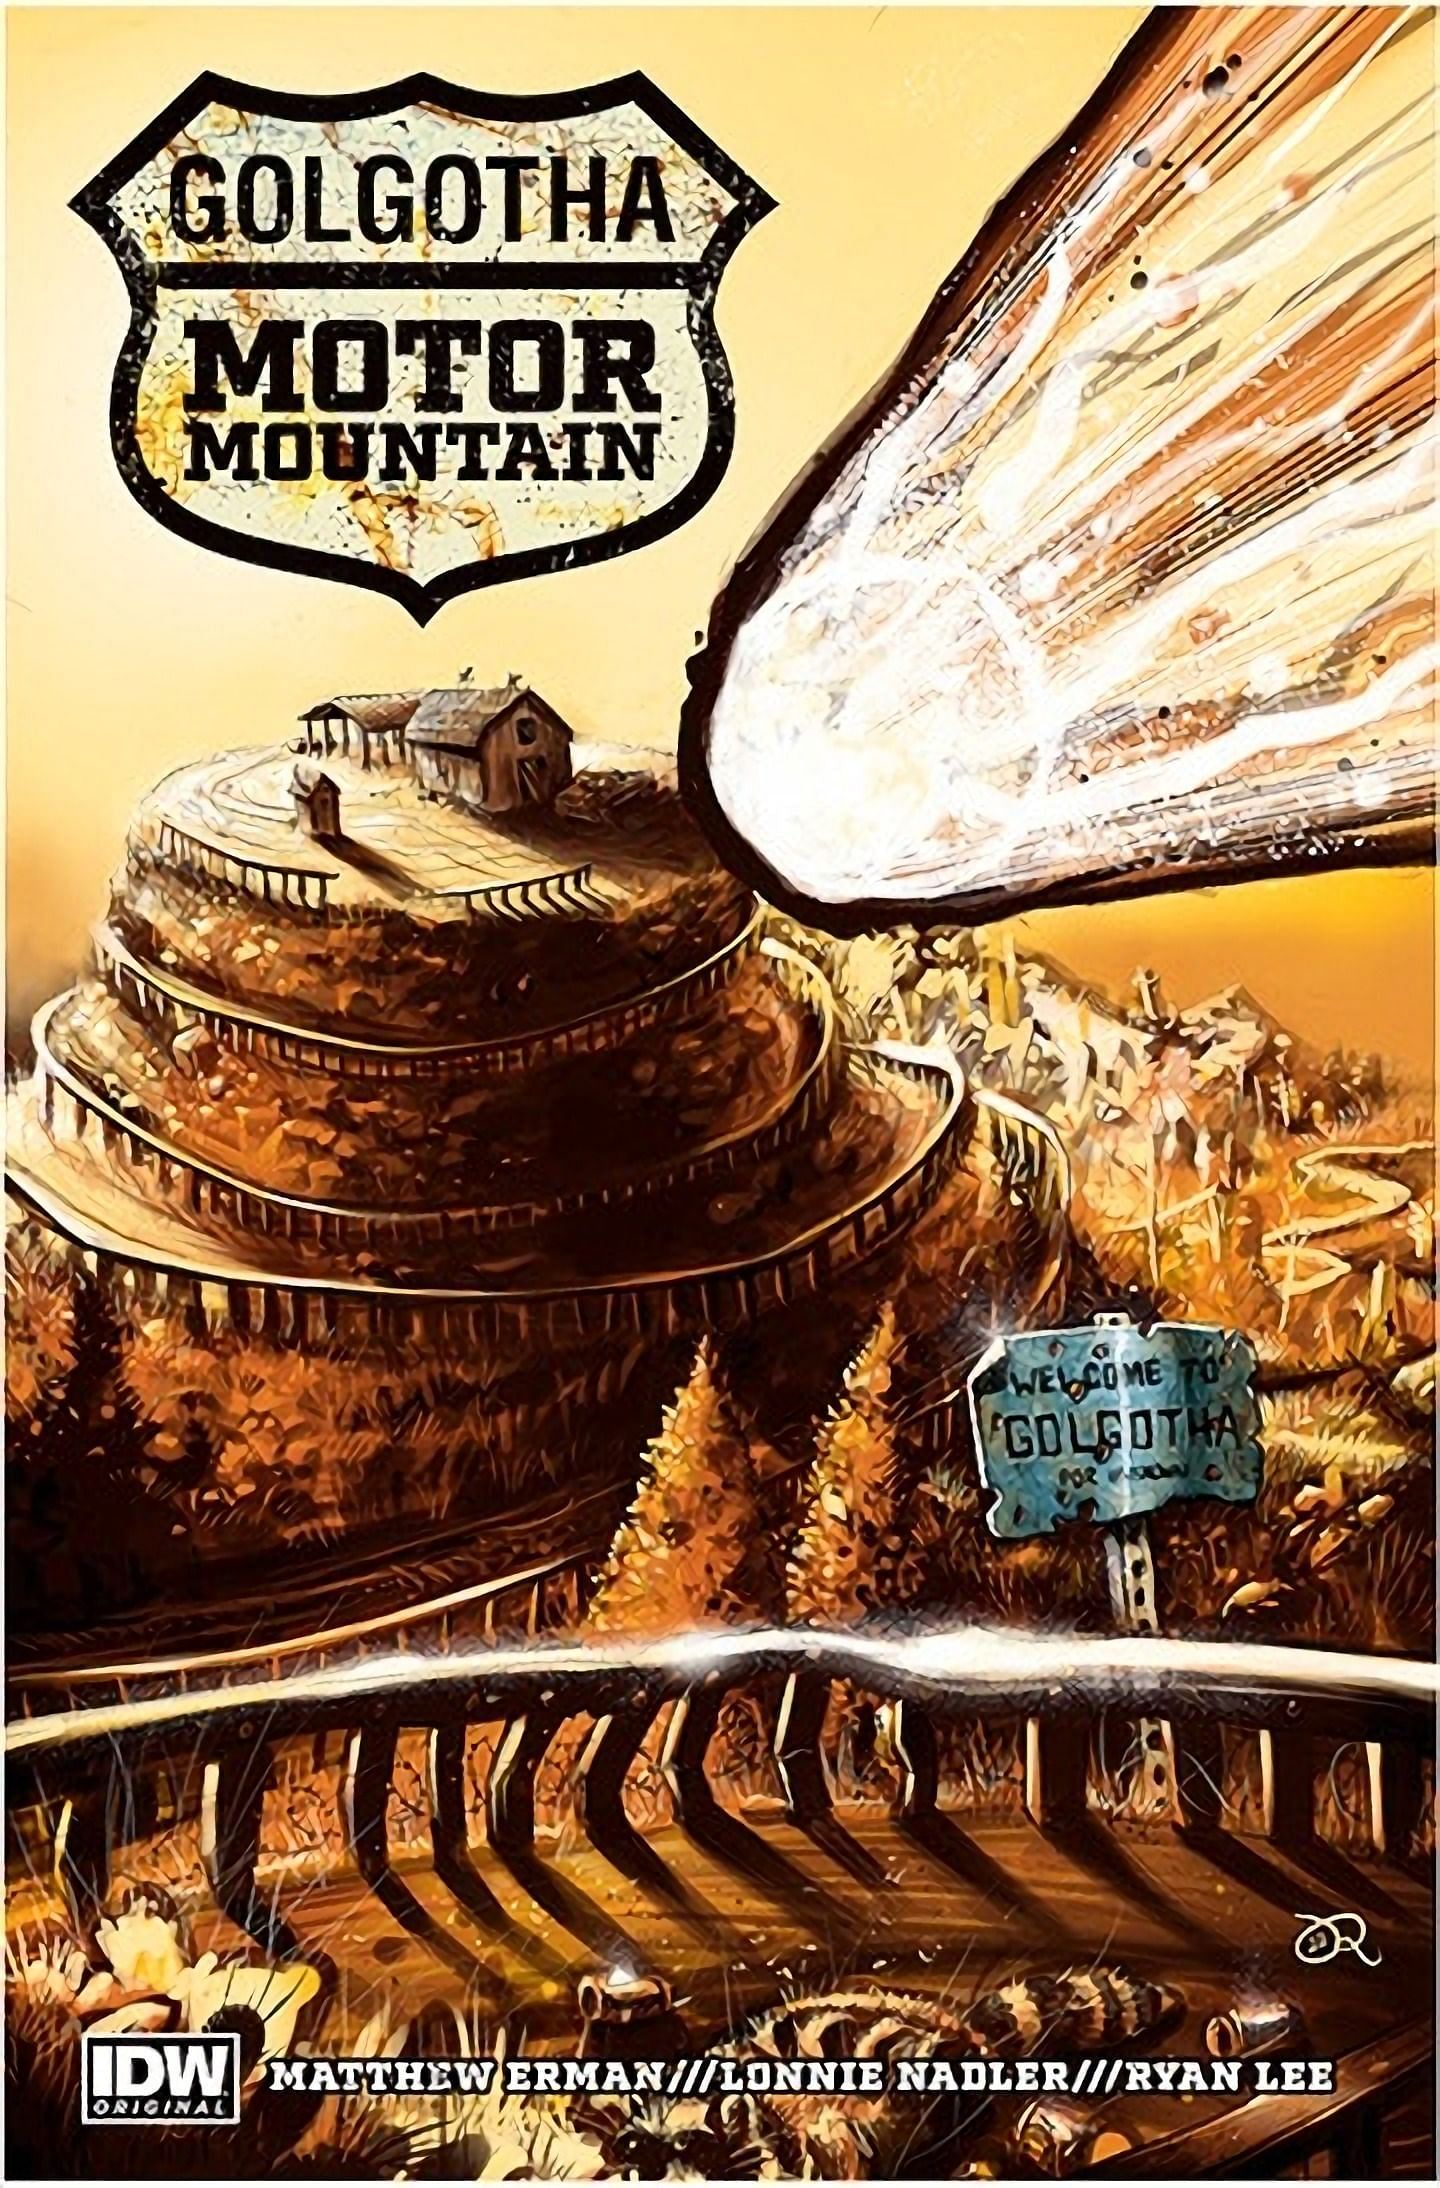 Golgotha Motor Mountain&#039;s comic cover (Image via IDW Publishing)